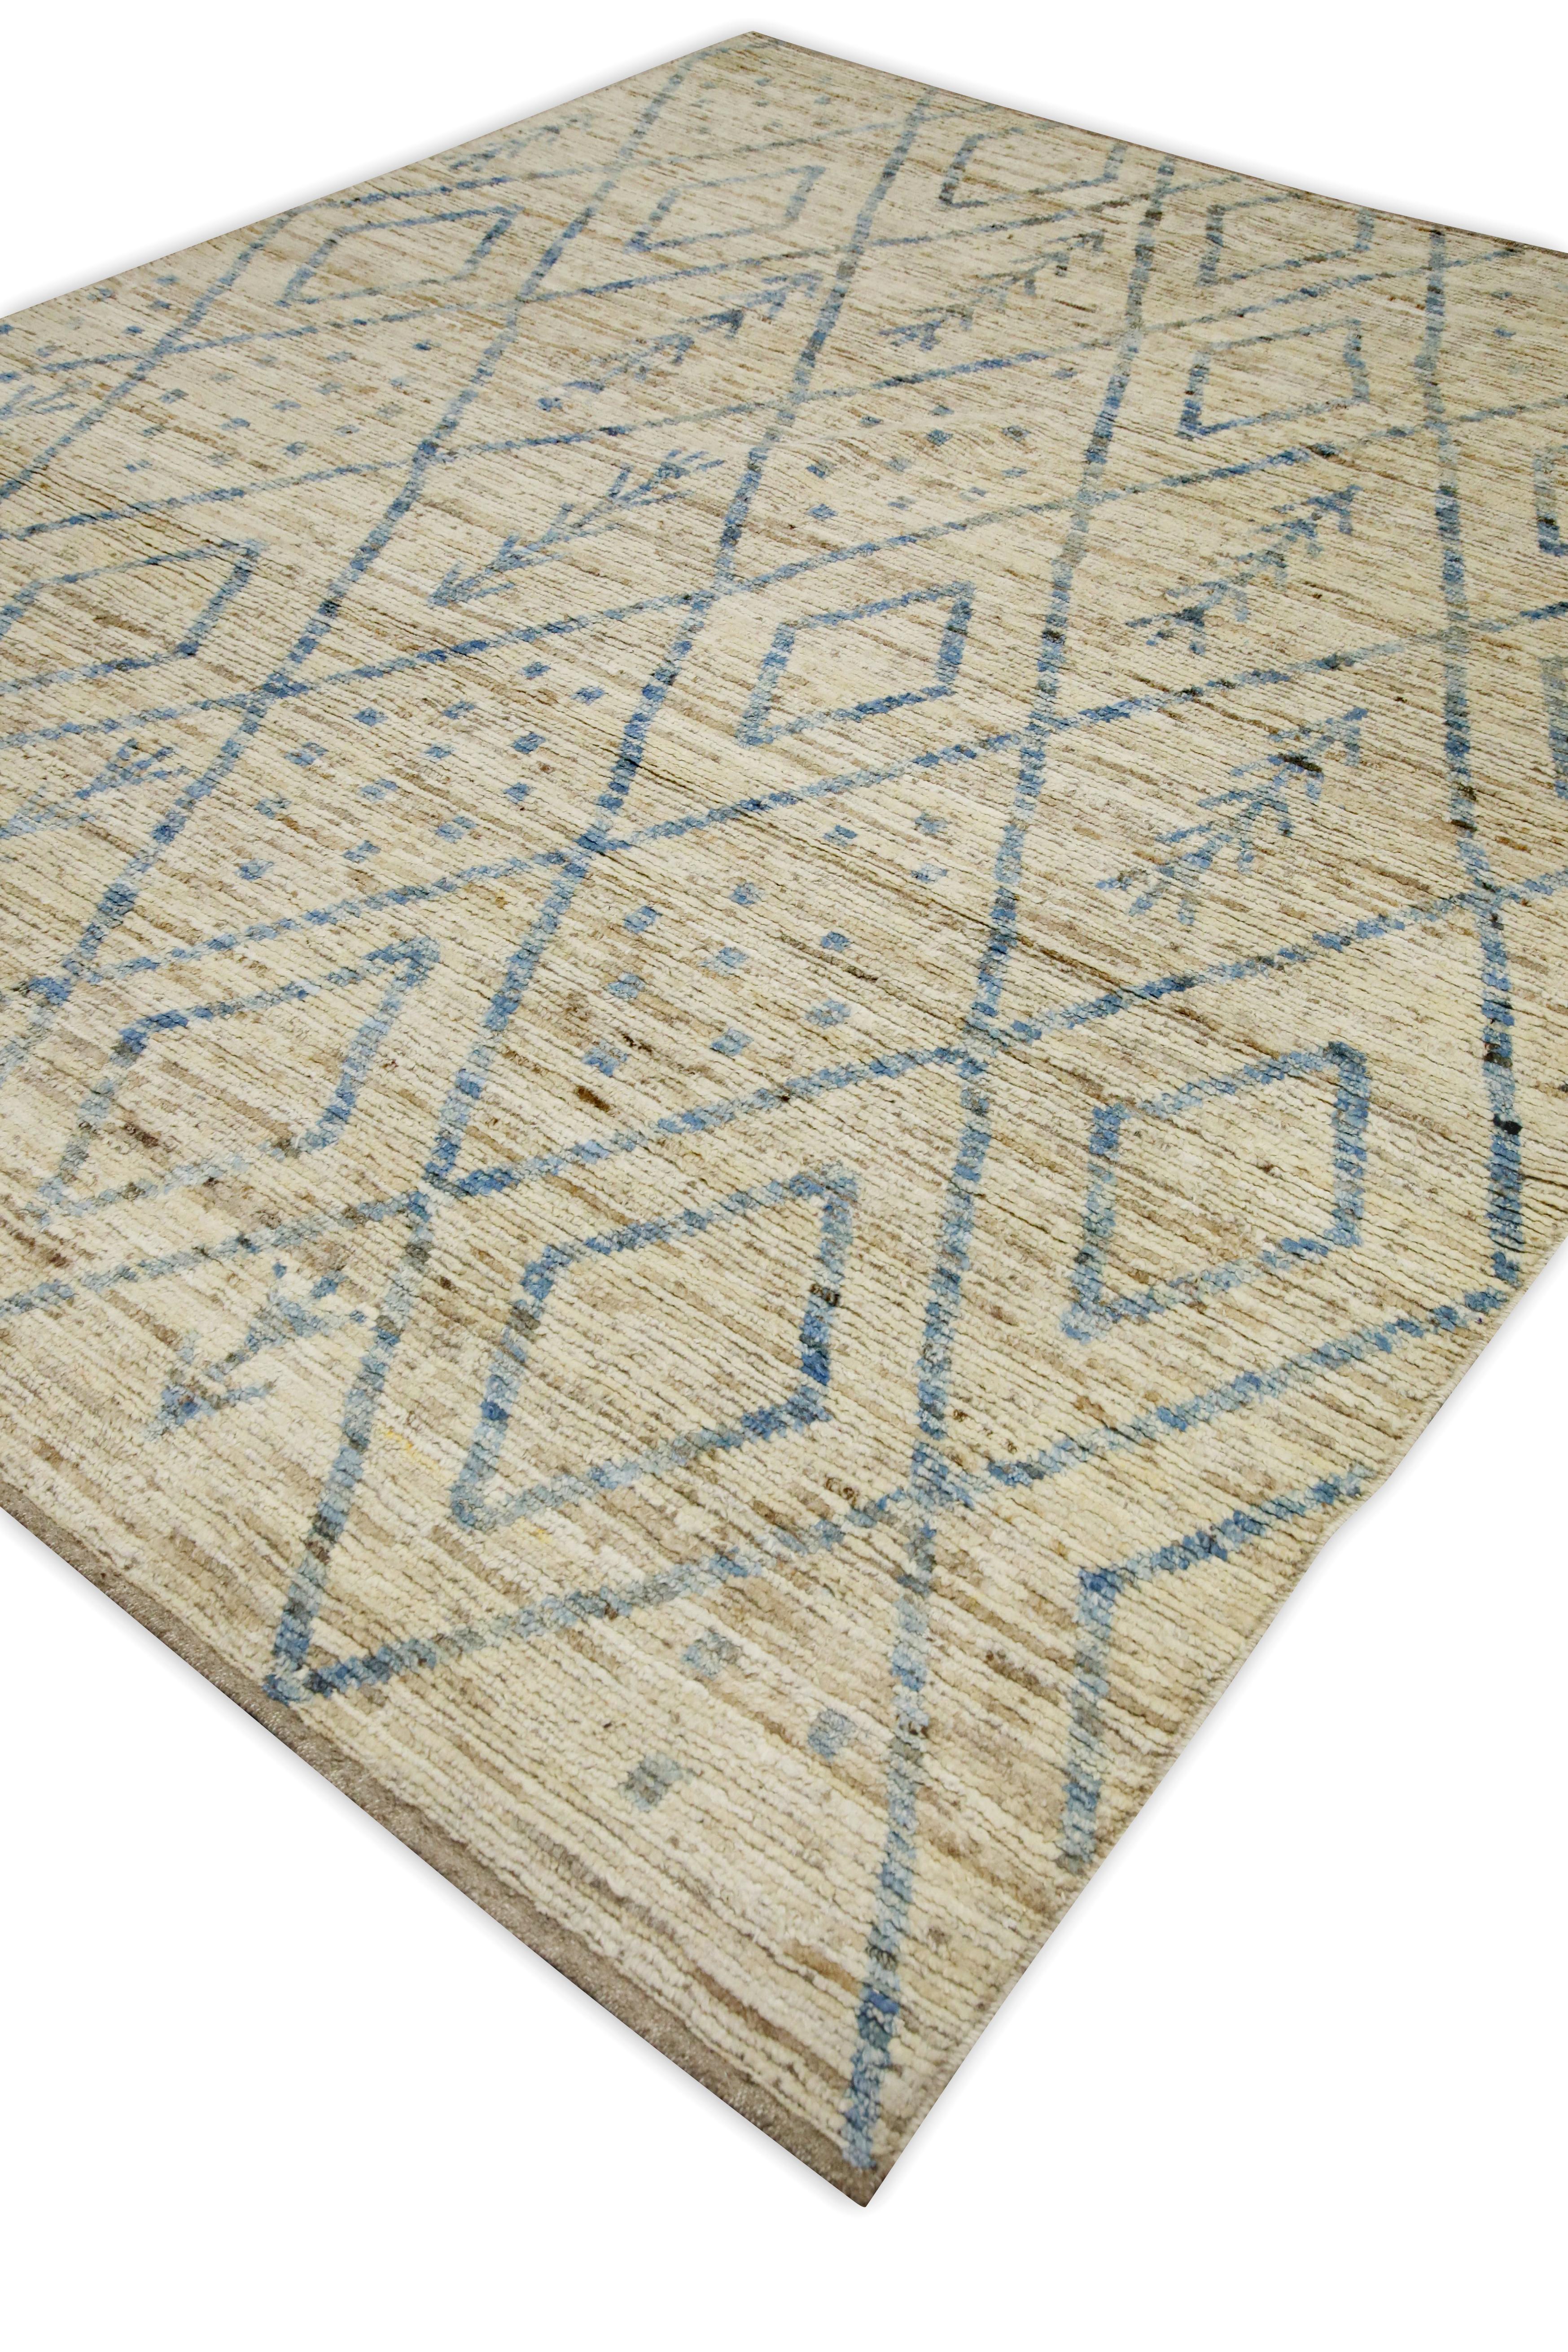 Contemporary Beige & Blue Handmade Wool Modern Turkish Rug in Geometric Design 8'5